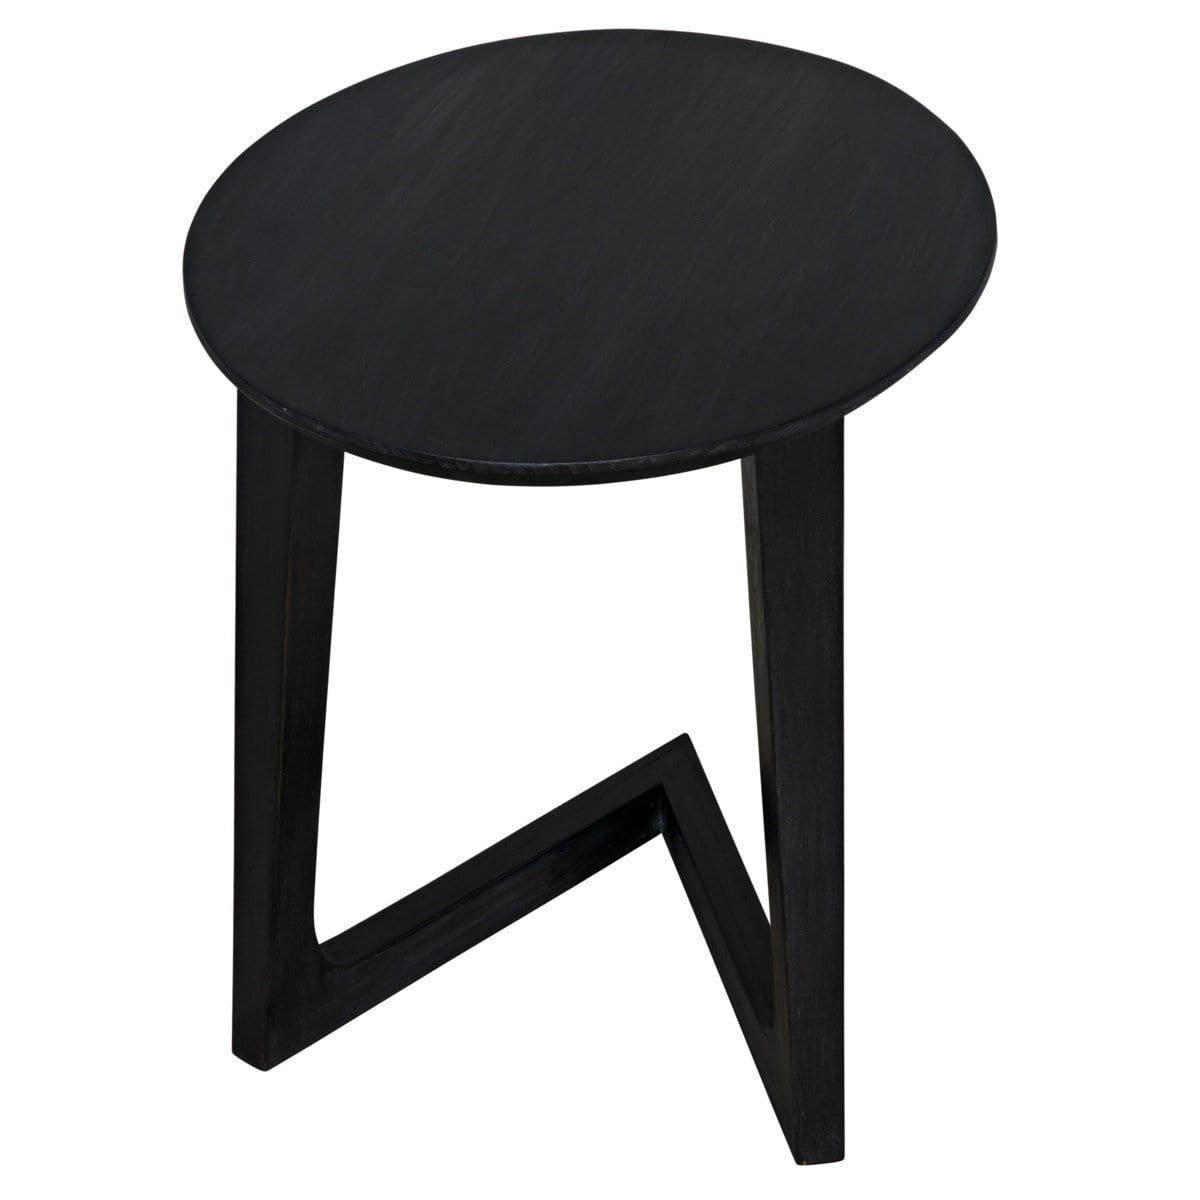 Noir Cantilever Side Table - Charcoal Black Furniture noir-AE-18CHB 00842449120600